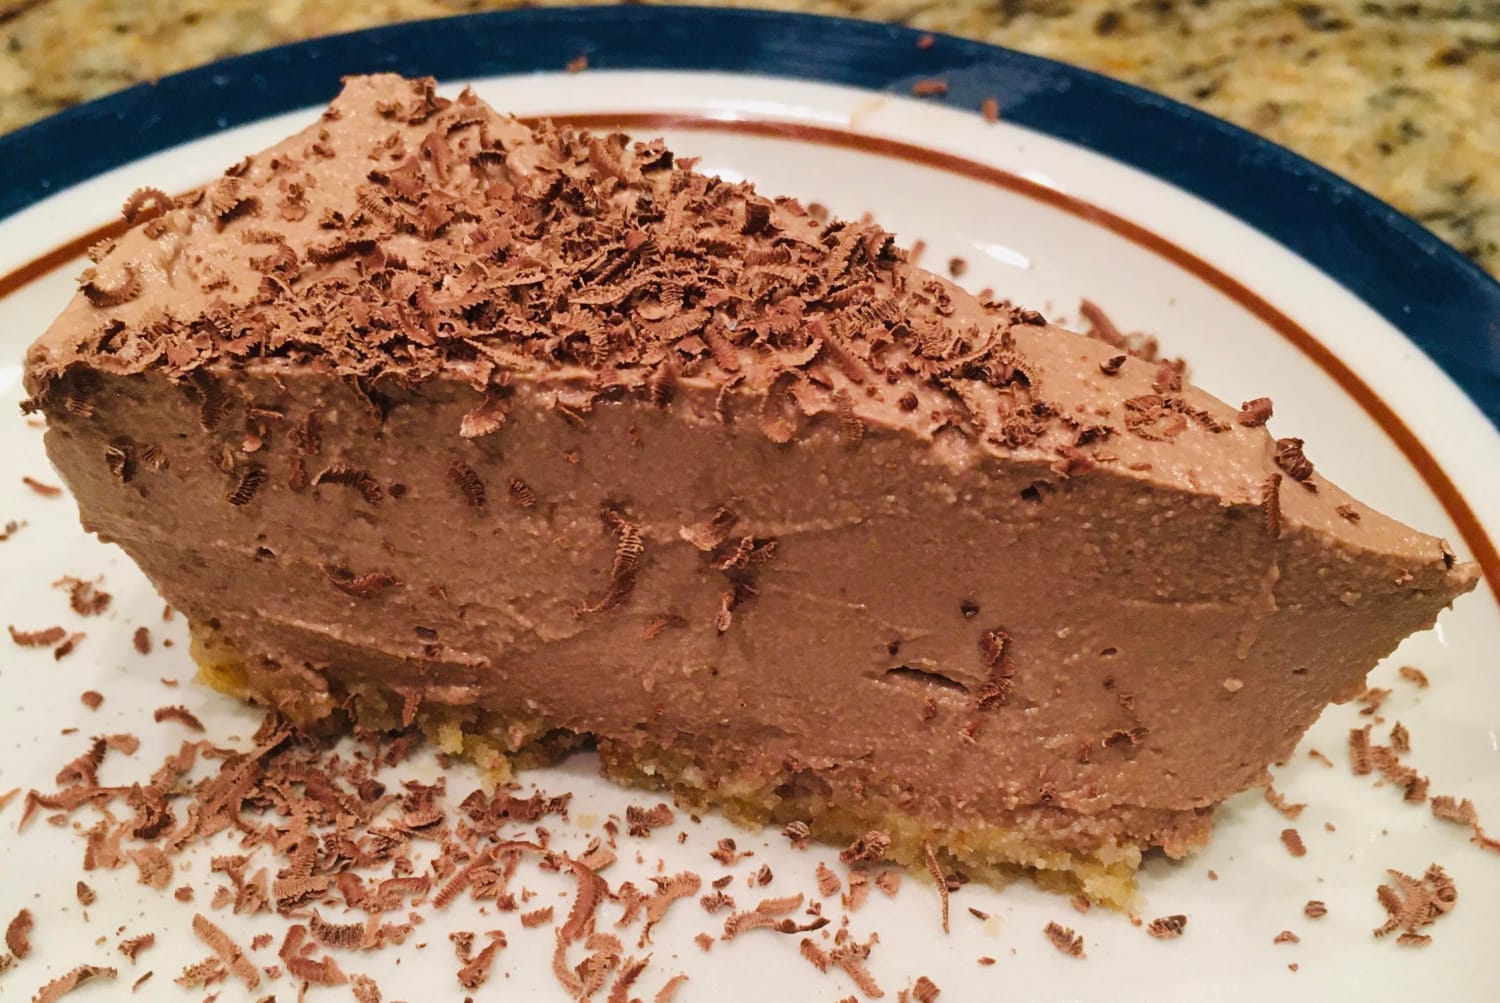 Chocolate Peanut Butter No-bake cheesecake